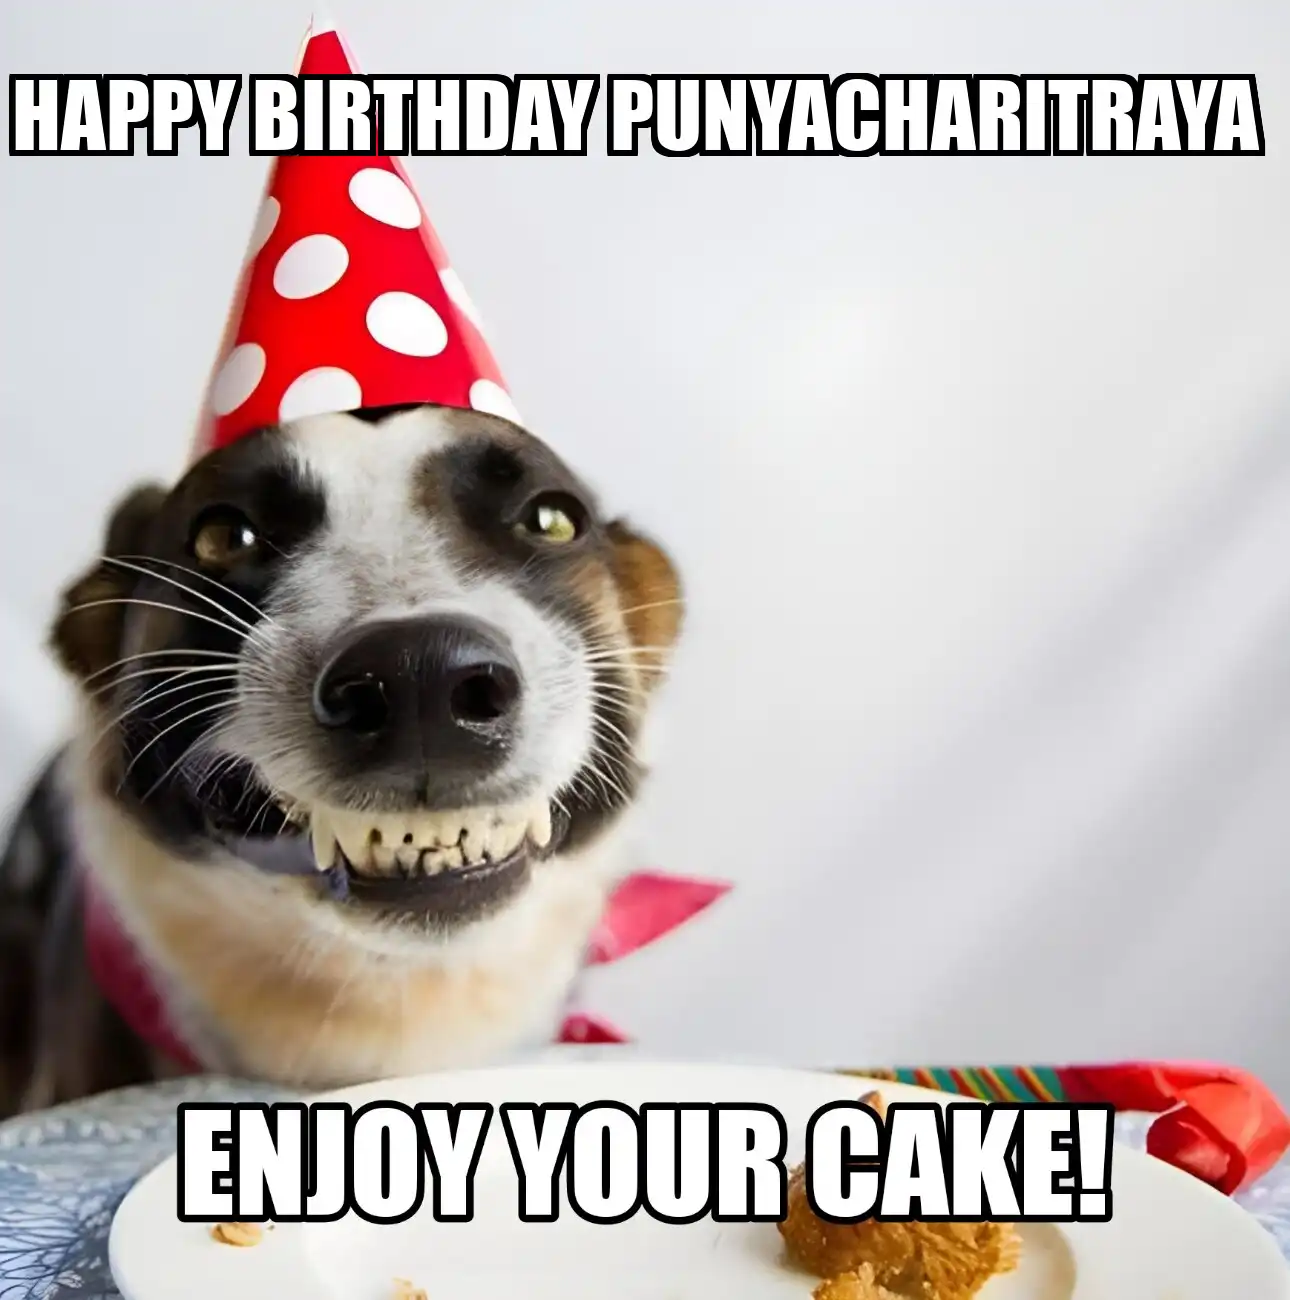 Happy Birthday Punyacharitraya Enjoy Your Cake Dog Meme